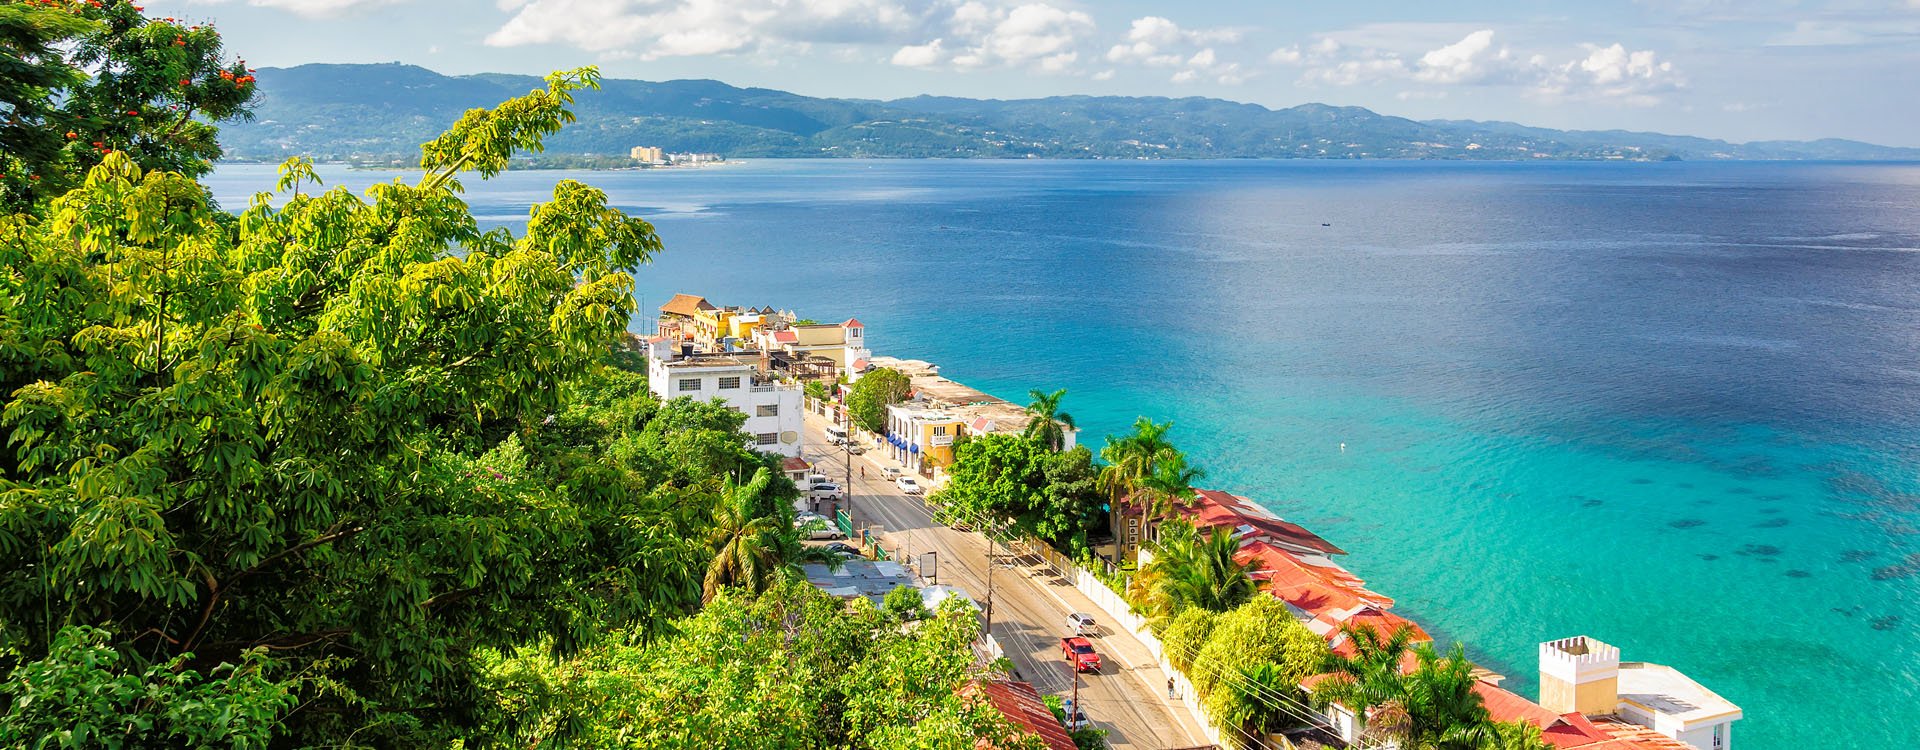 Jamaica island, Montego Bay, Caribbean Sea